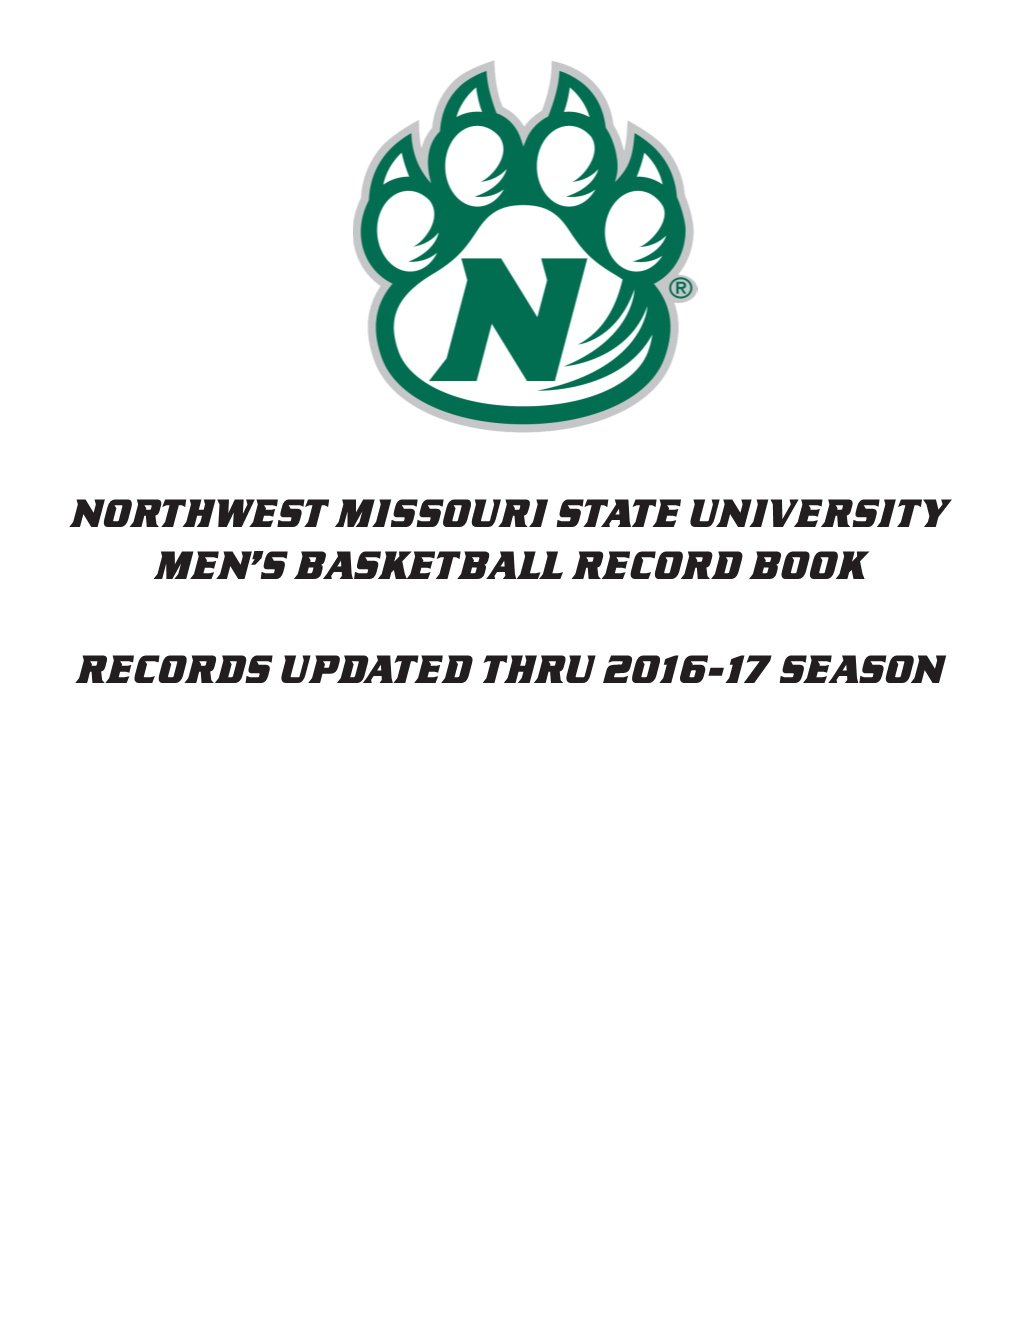 Northwest Missouri State University Men's